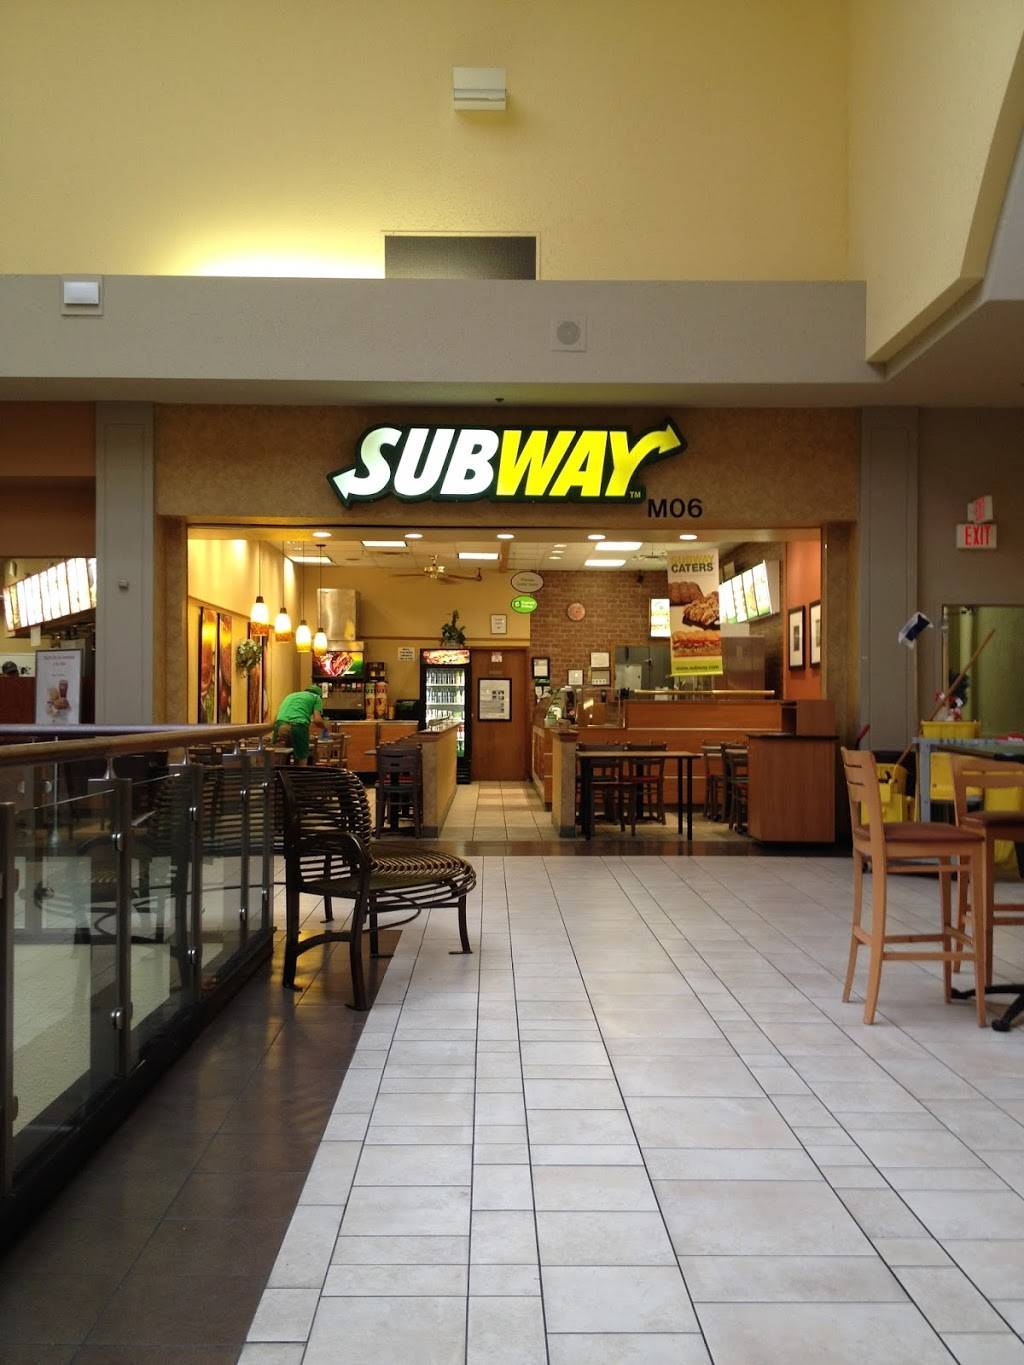 Subway Meal Takeaway Cielo Vista Mall Unit M06 El Paso Tx 79925 Usa